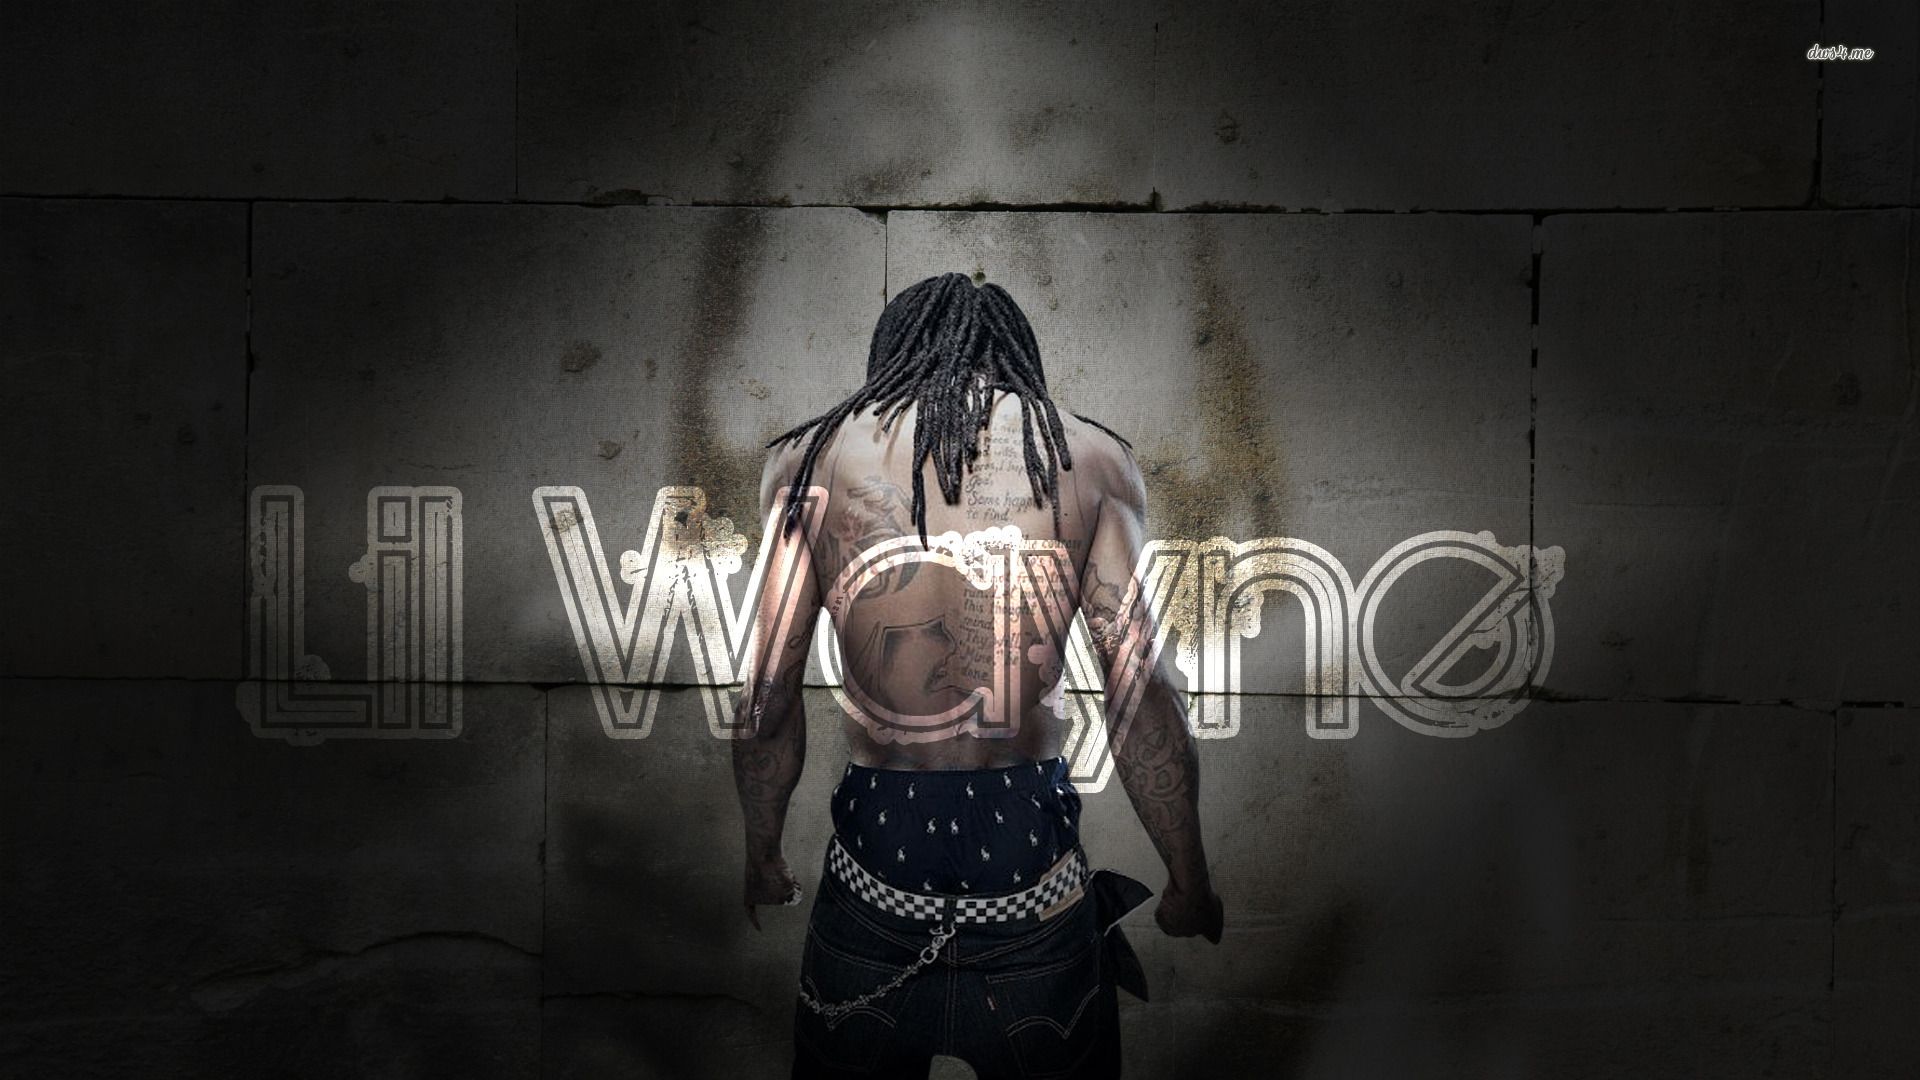 Lil Wayne wallpaper - Music wallpapers - #4679